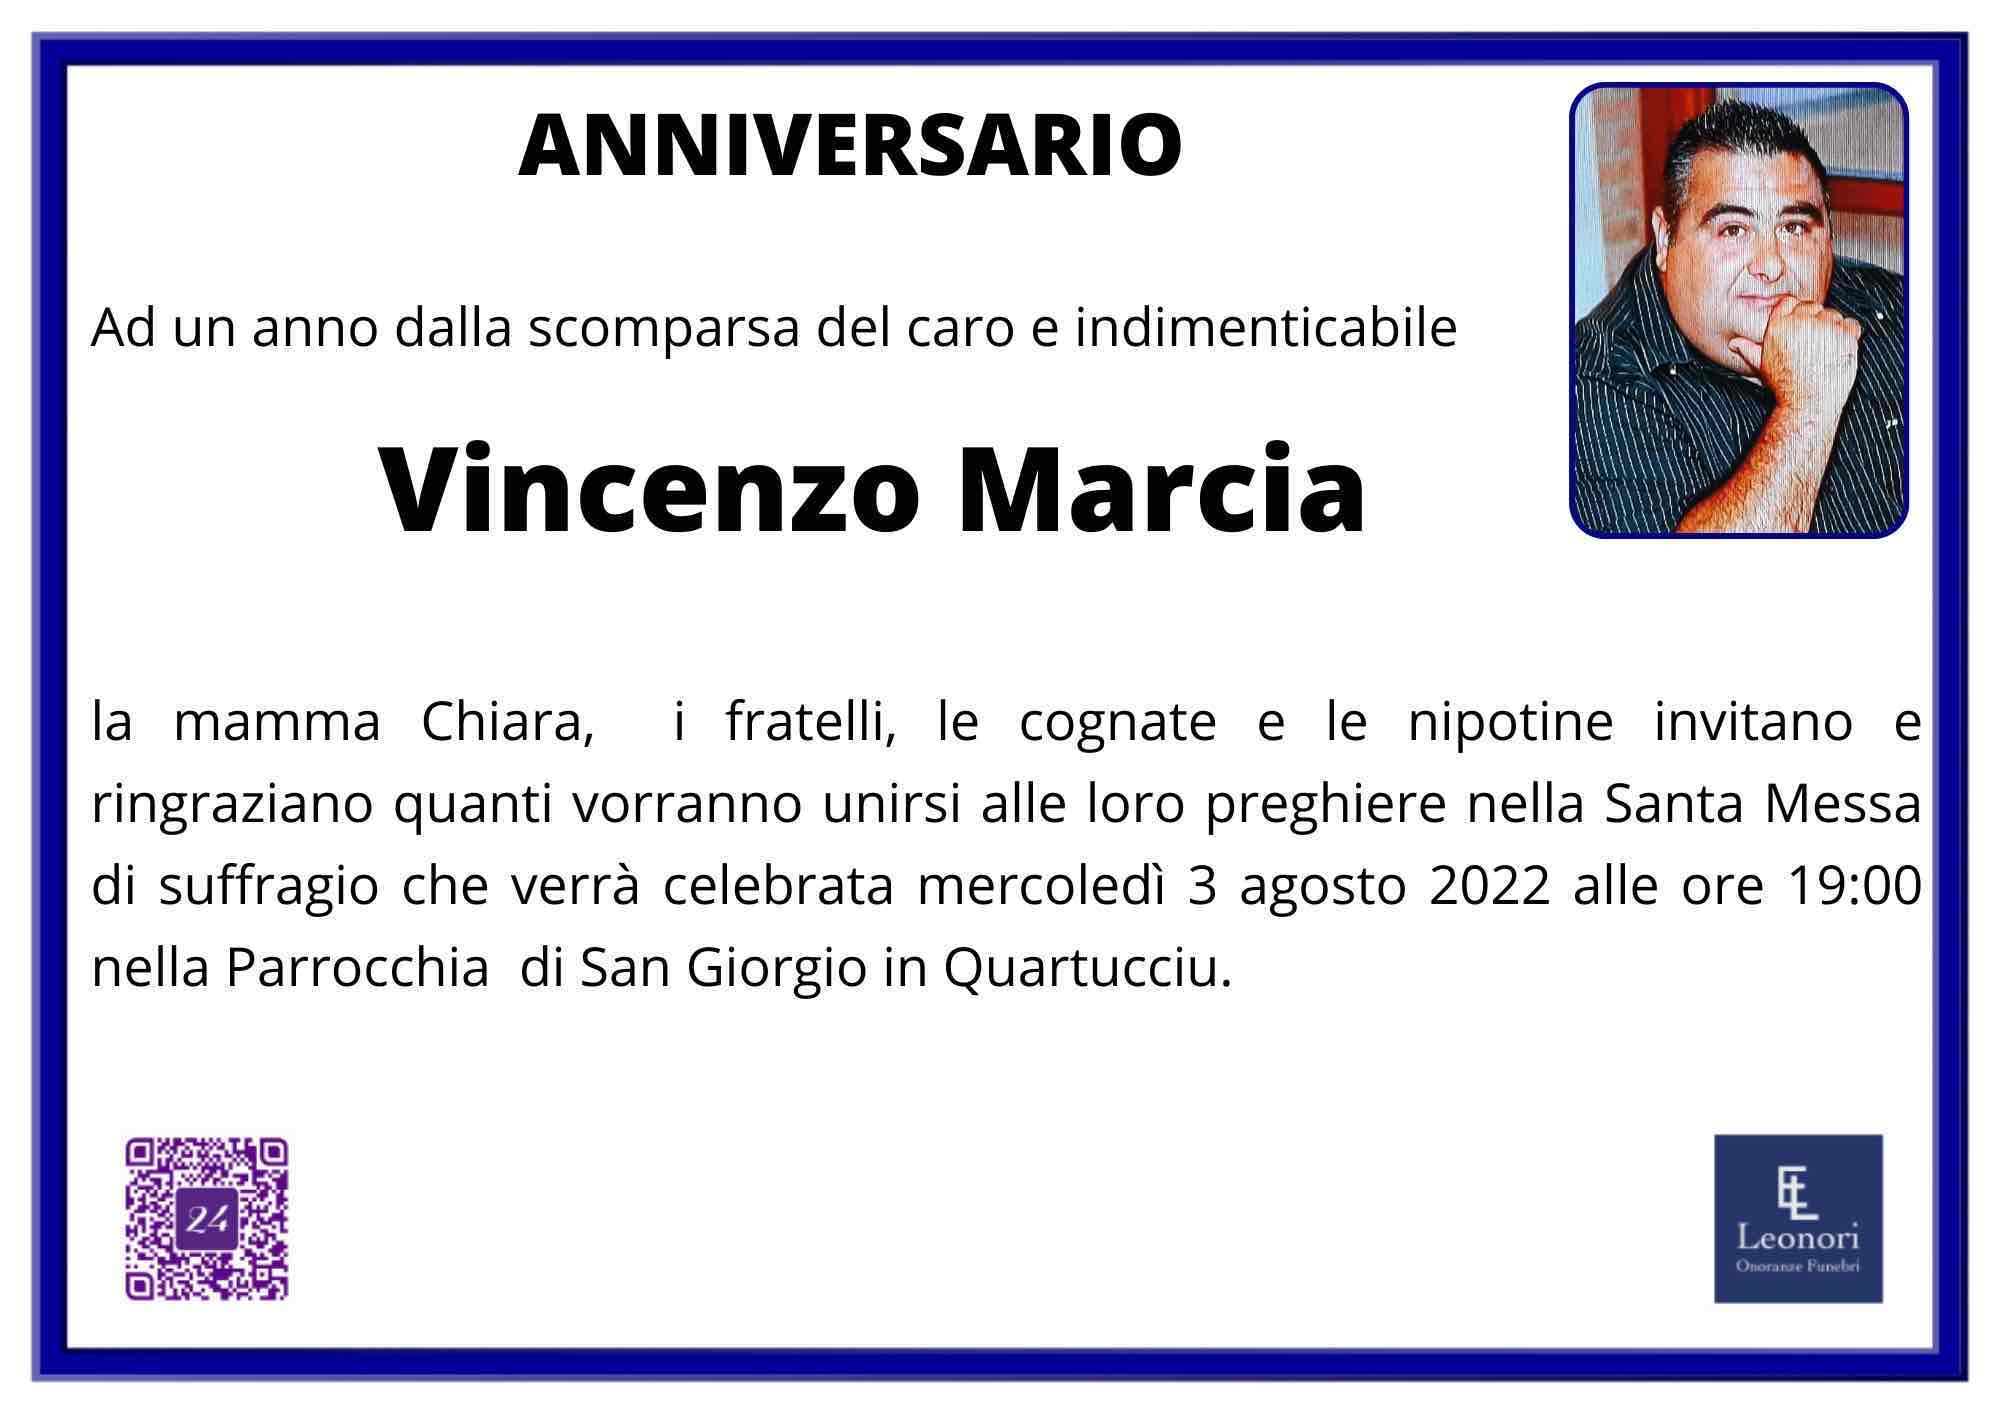 Vincenzo Marcia